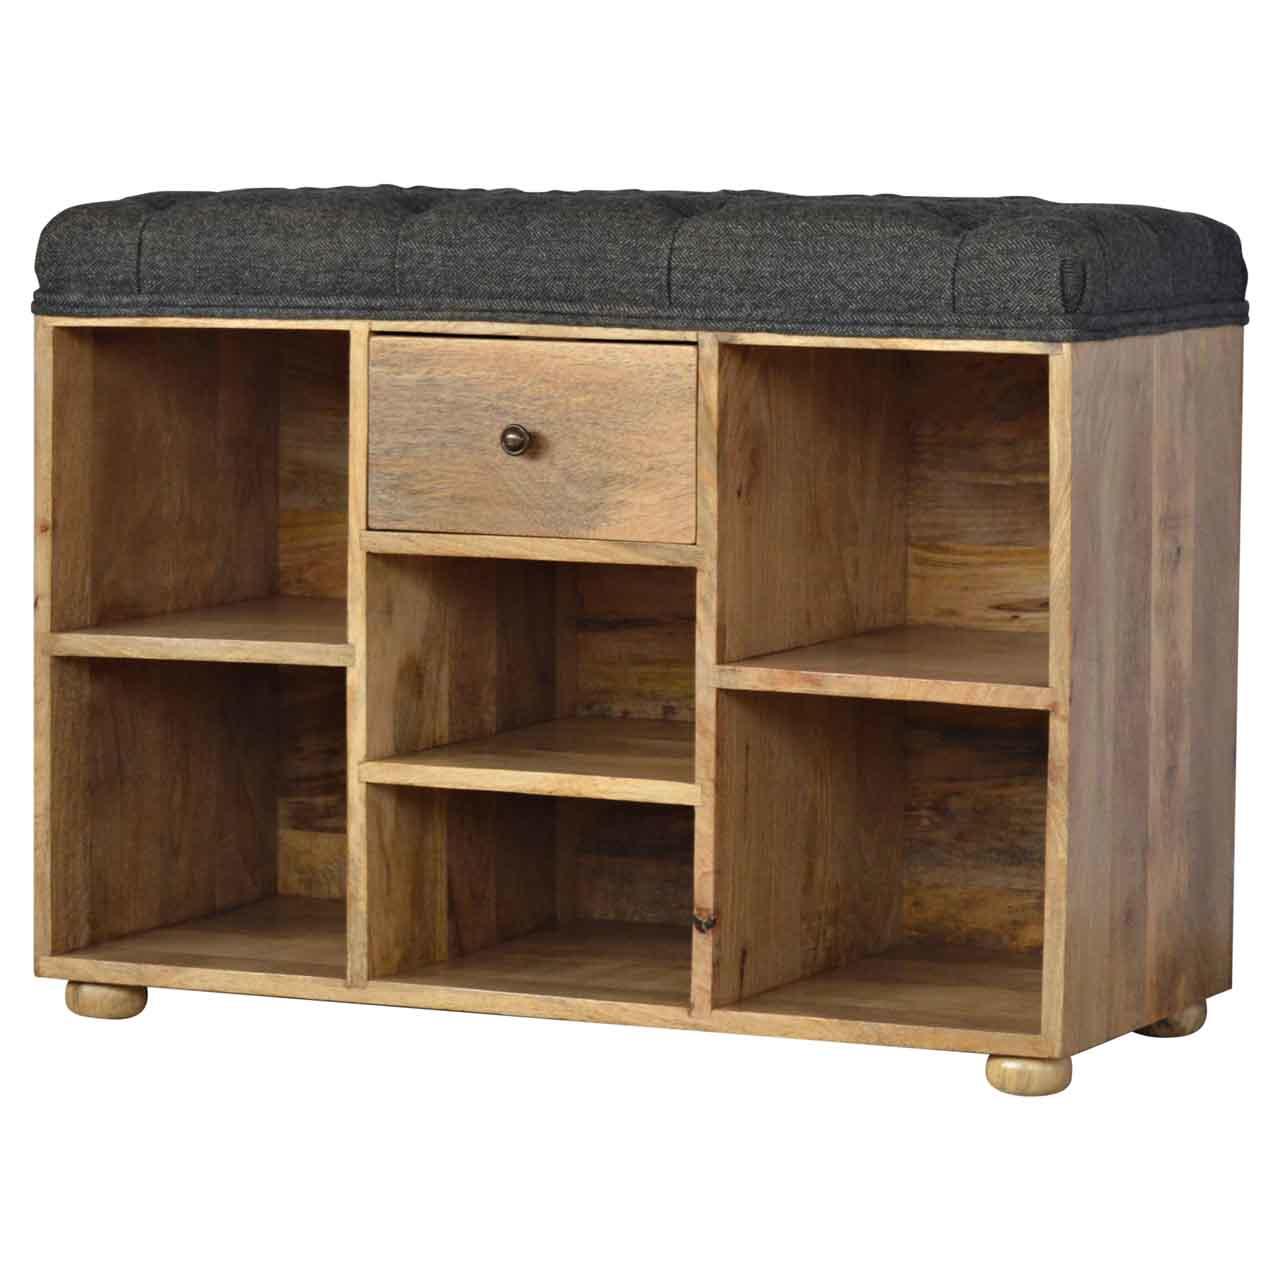 Black tweed 6 slot shoe storage bench - crimblefest furniture - image 4